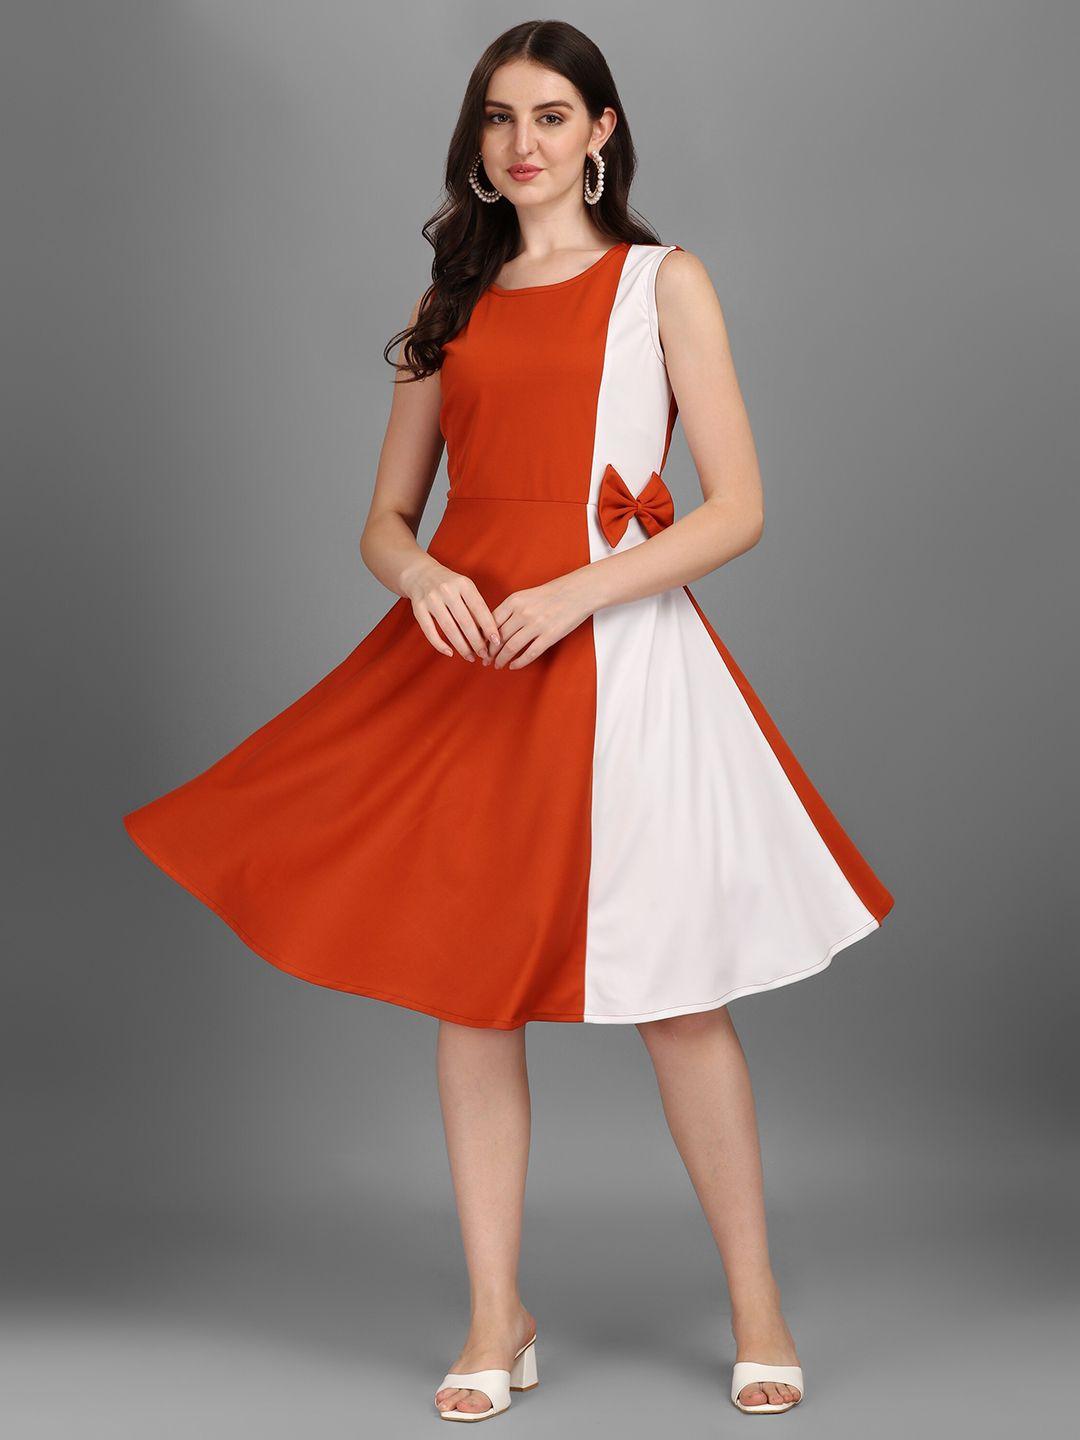 kinjo rust orange & white colourblocked dress